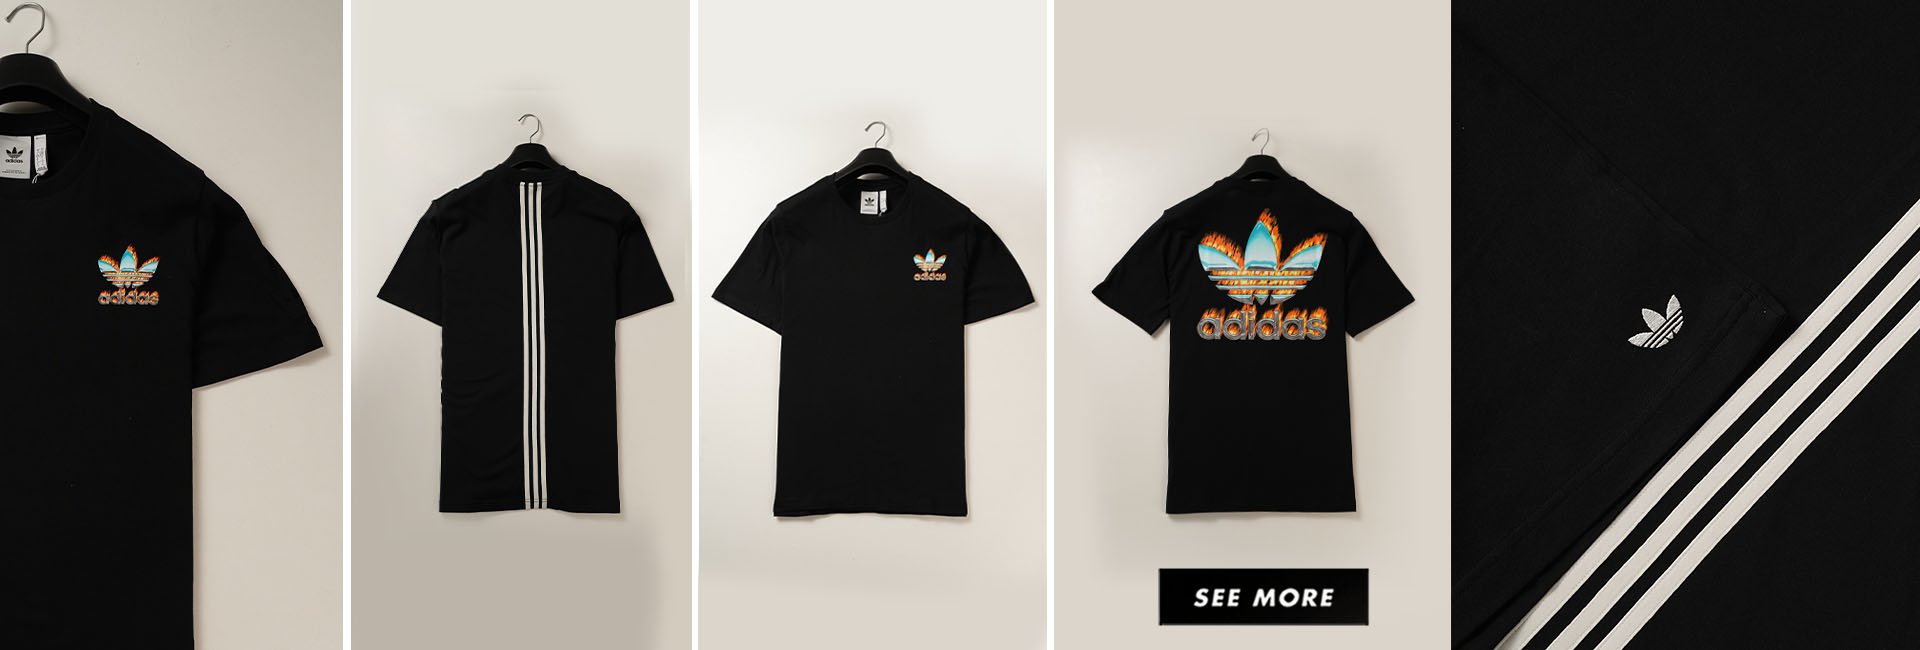 Buy Adidas Originals T-Shirt Range Products | Online Store | Side